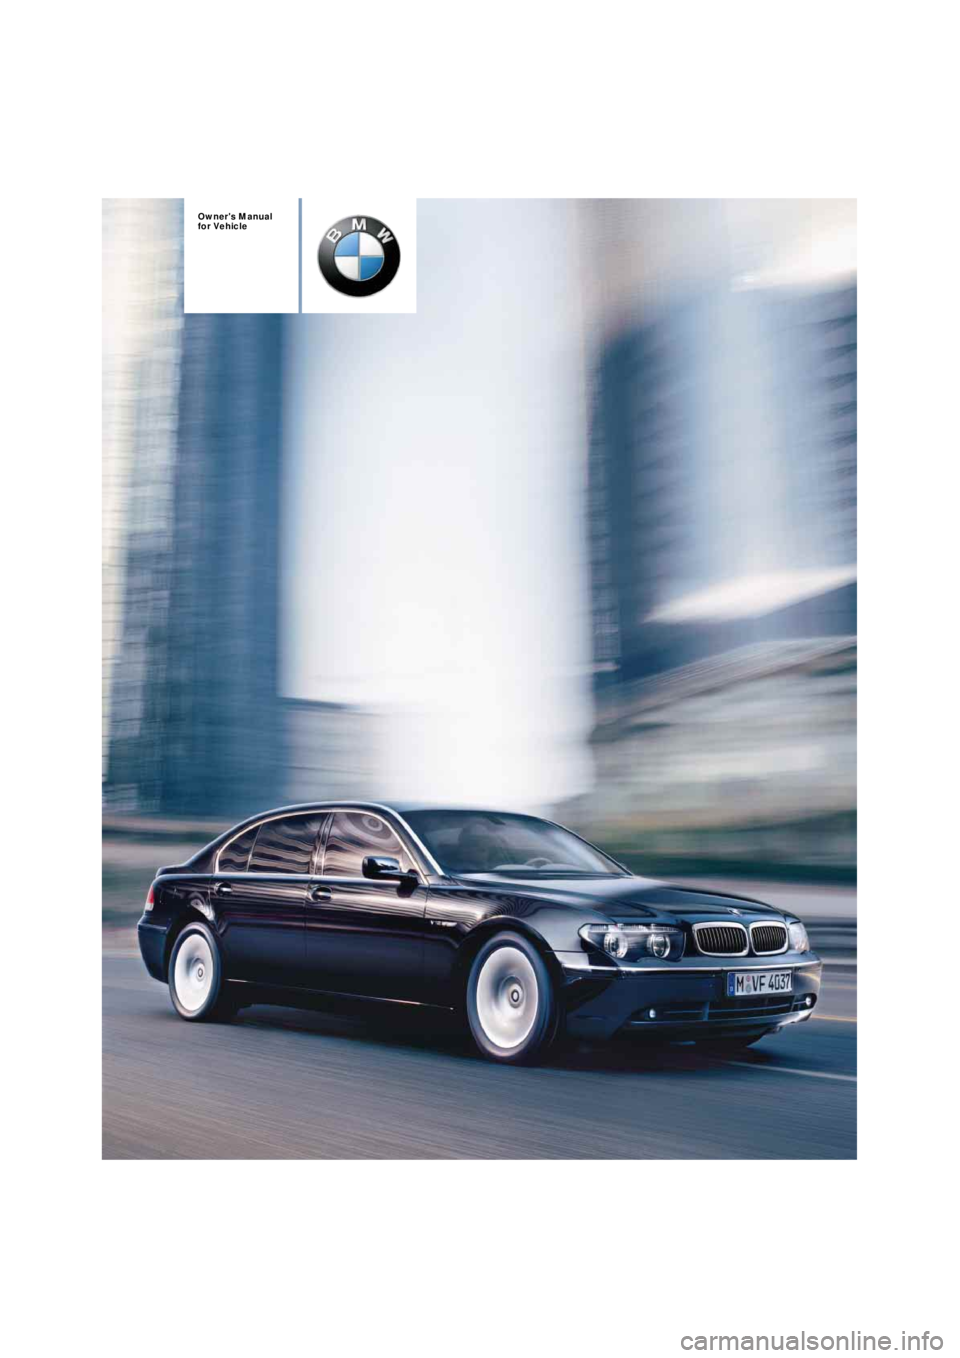 BMW 760LI SEDAN 2004  Owners Manual  
Owners Manual
for Vehicle 